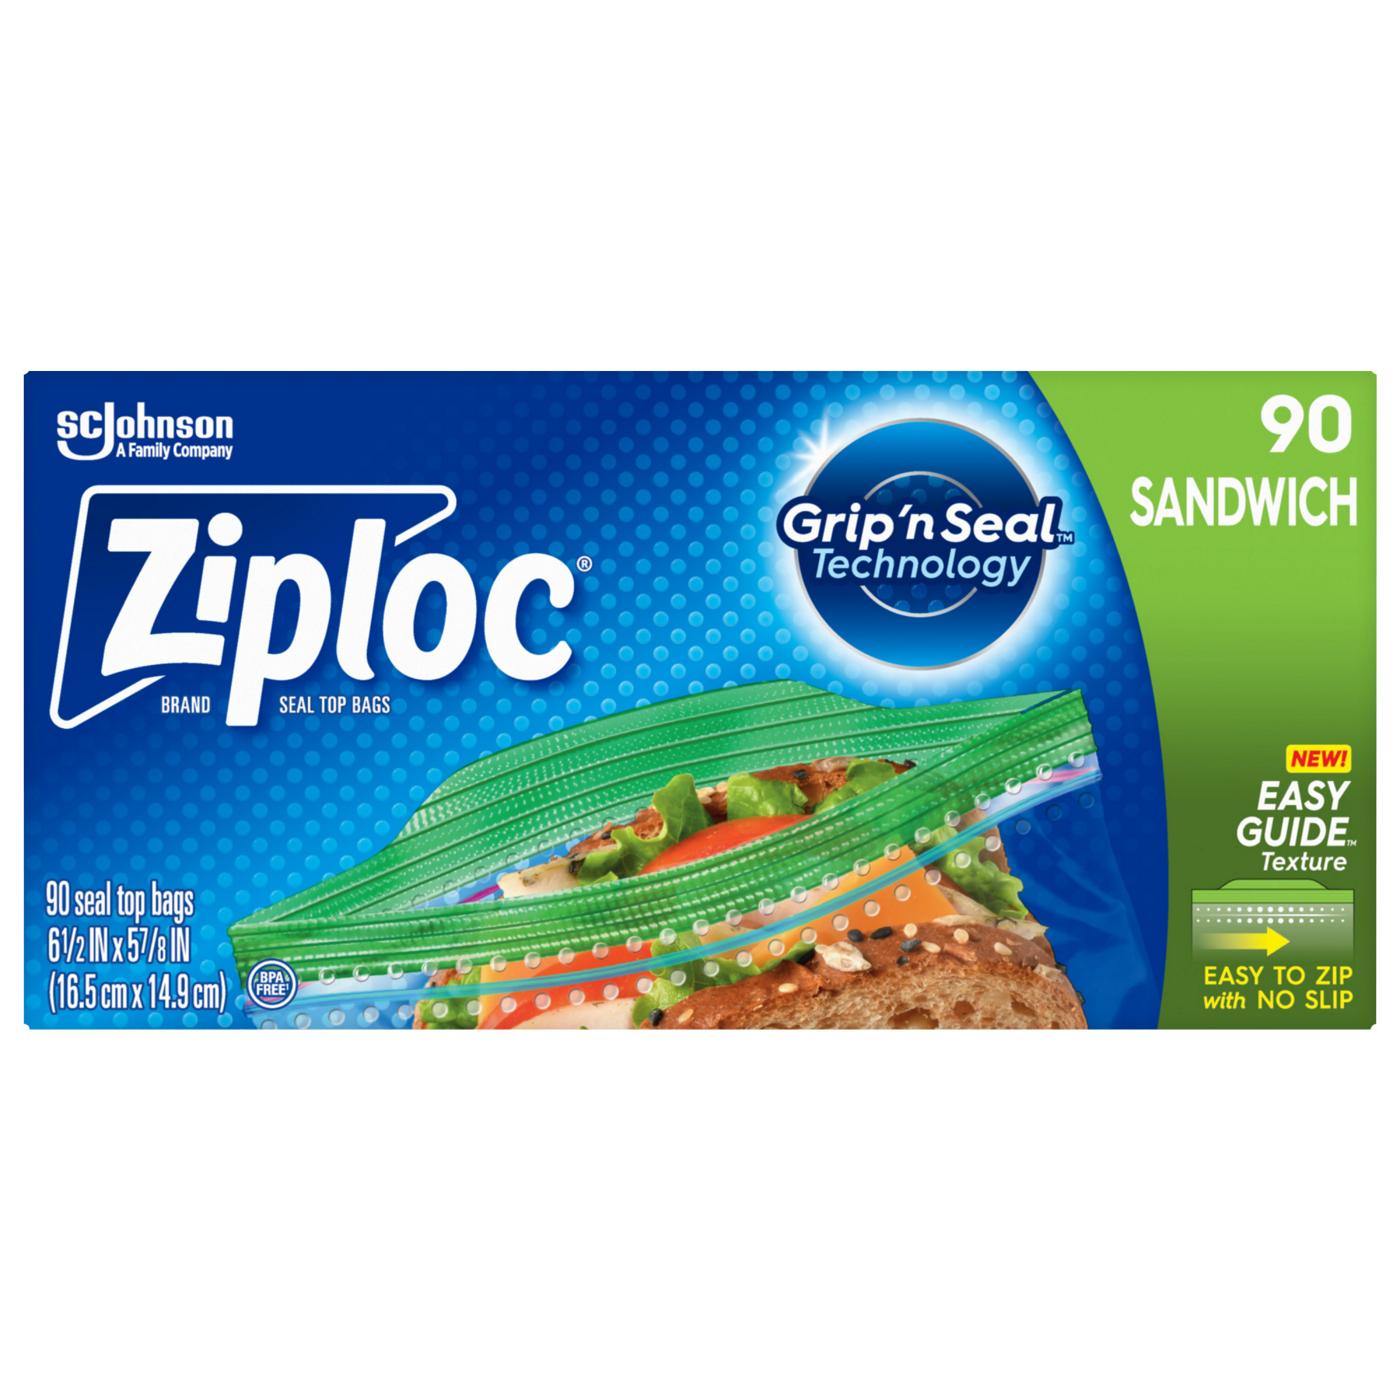 Ziploc Sandwich Bags with EasyGuide; image 1 of 6